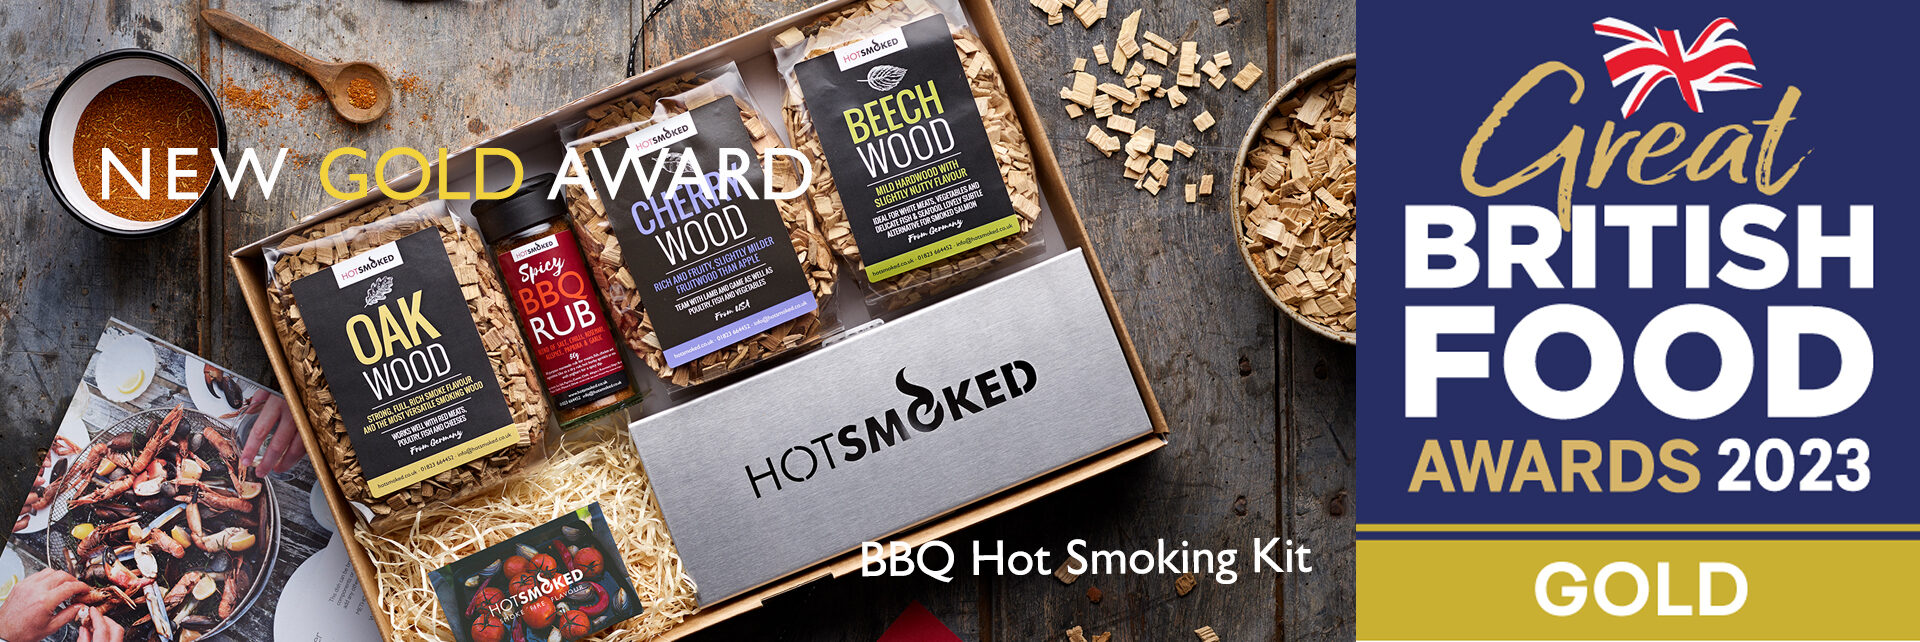 Great British Food Awards Gold Winner - BBQ Hot Smoking Kit